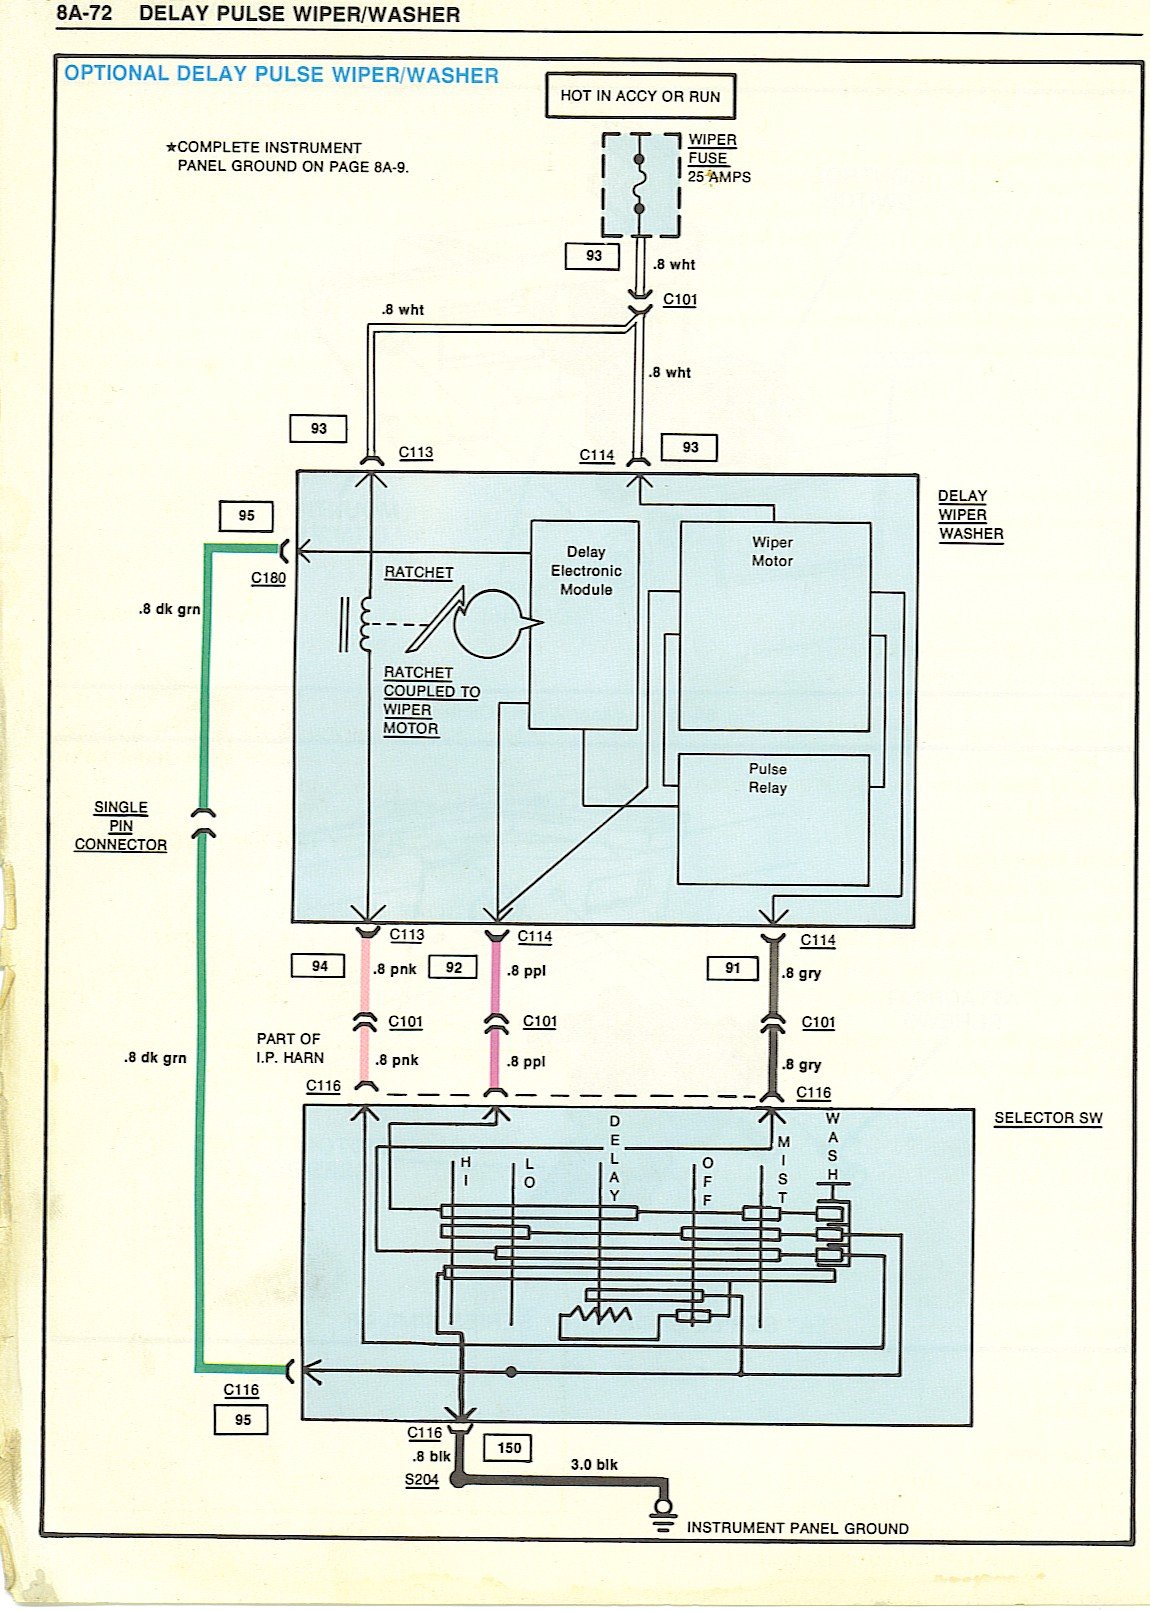 How to test wiper motor for ground | GBodyForum - 1978-1988 General Motors  A/G-Body Community 70 Chevy Truck Wiring Diagram GBodyForum